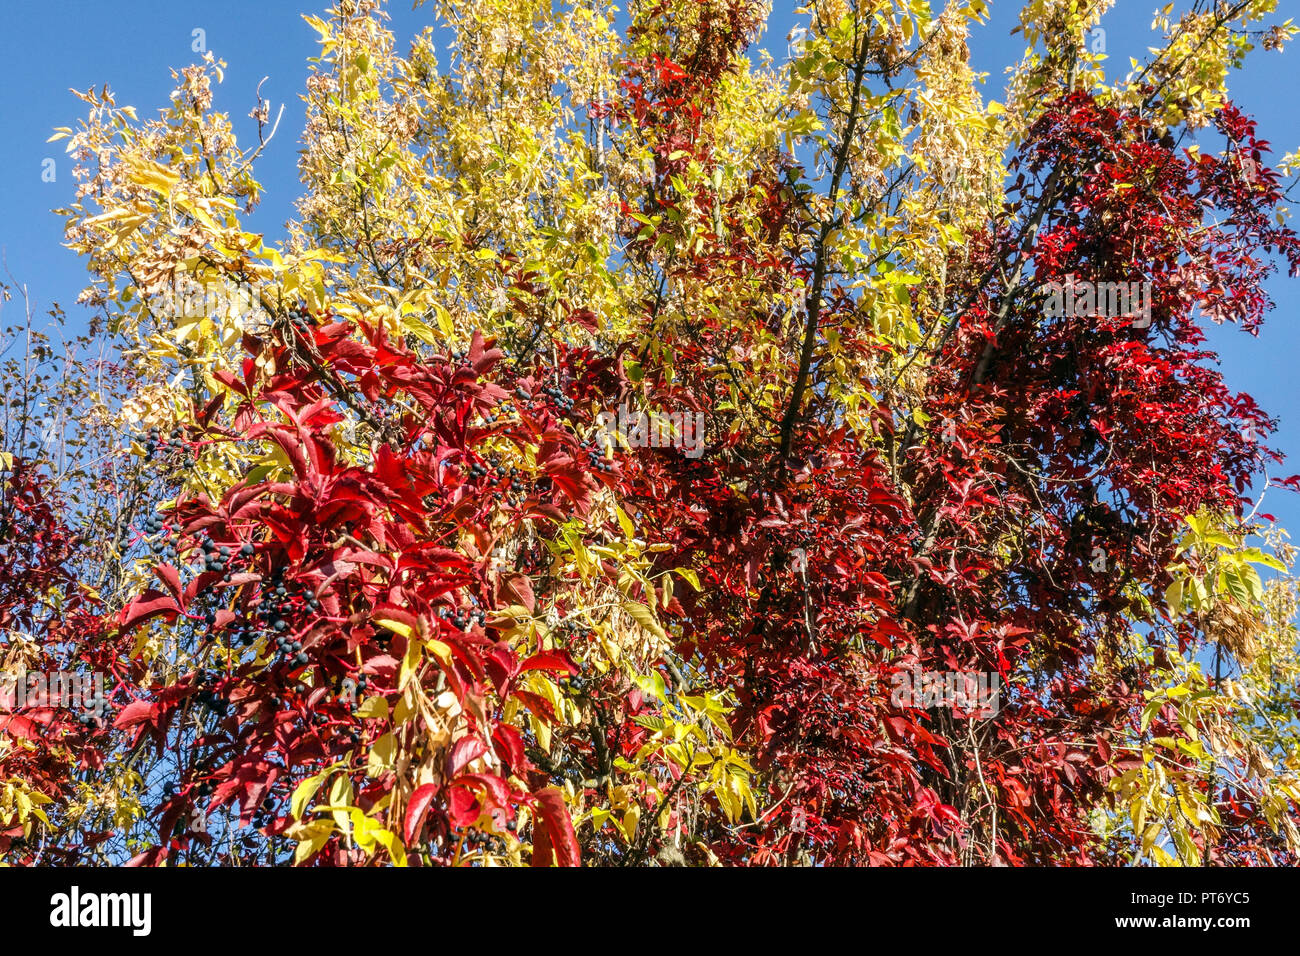 Indian summer, colorful foliage Virginia Creeper on yellow Acer negundo autumn leaves Stock Photo